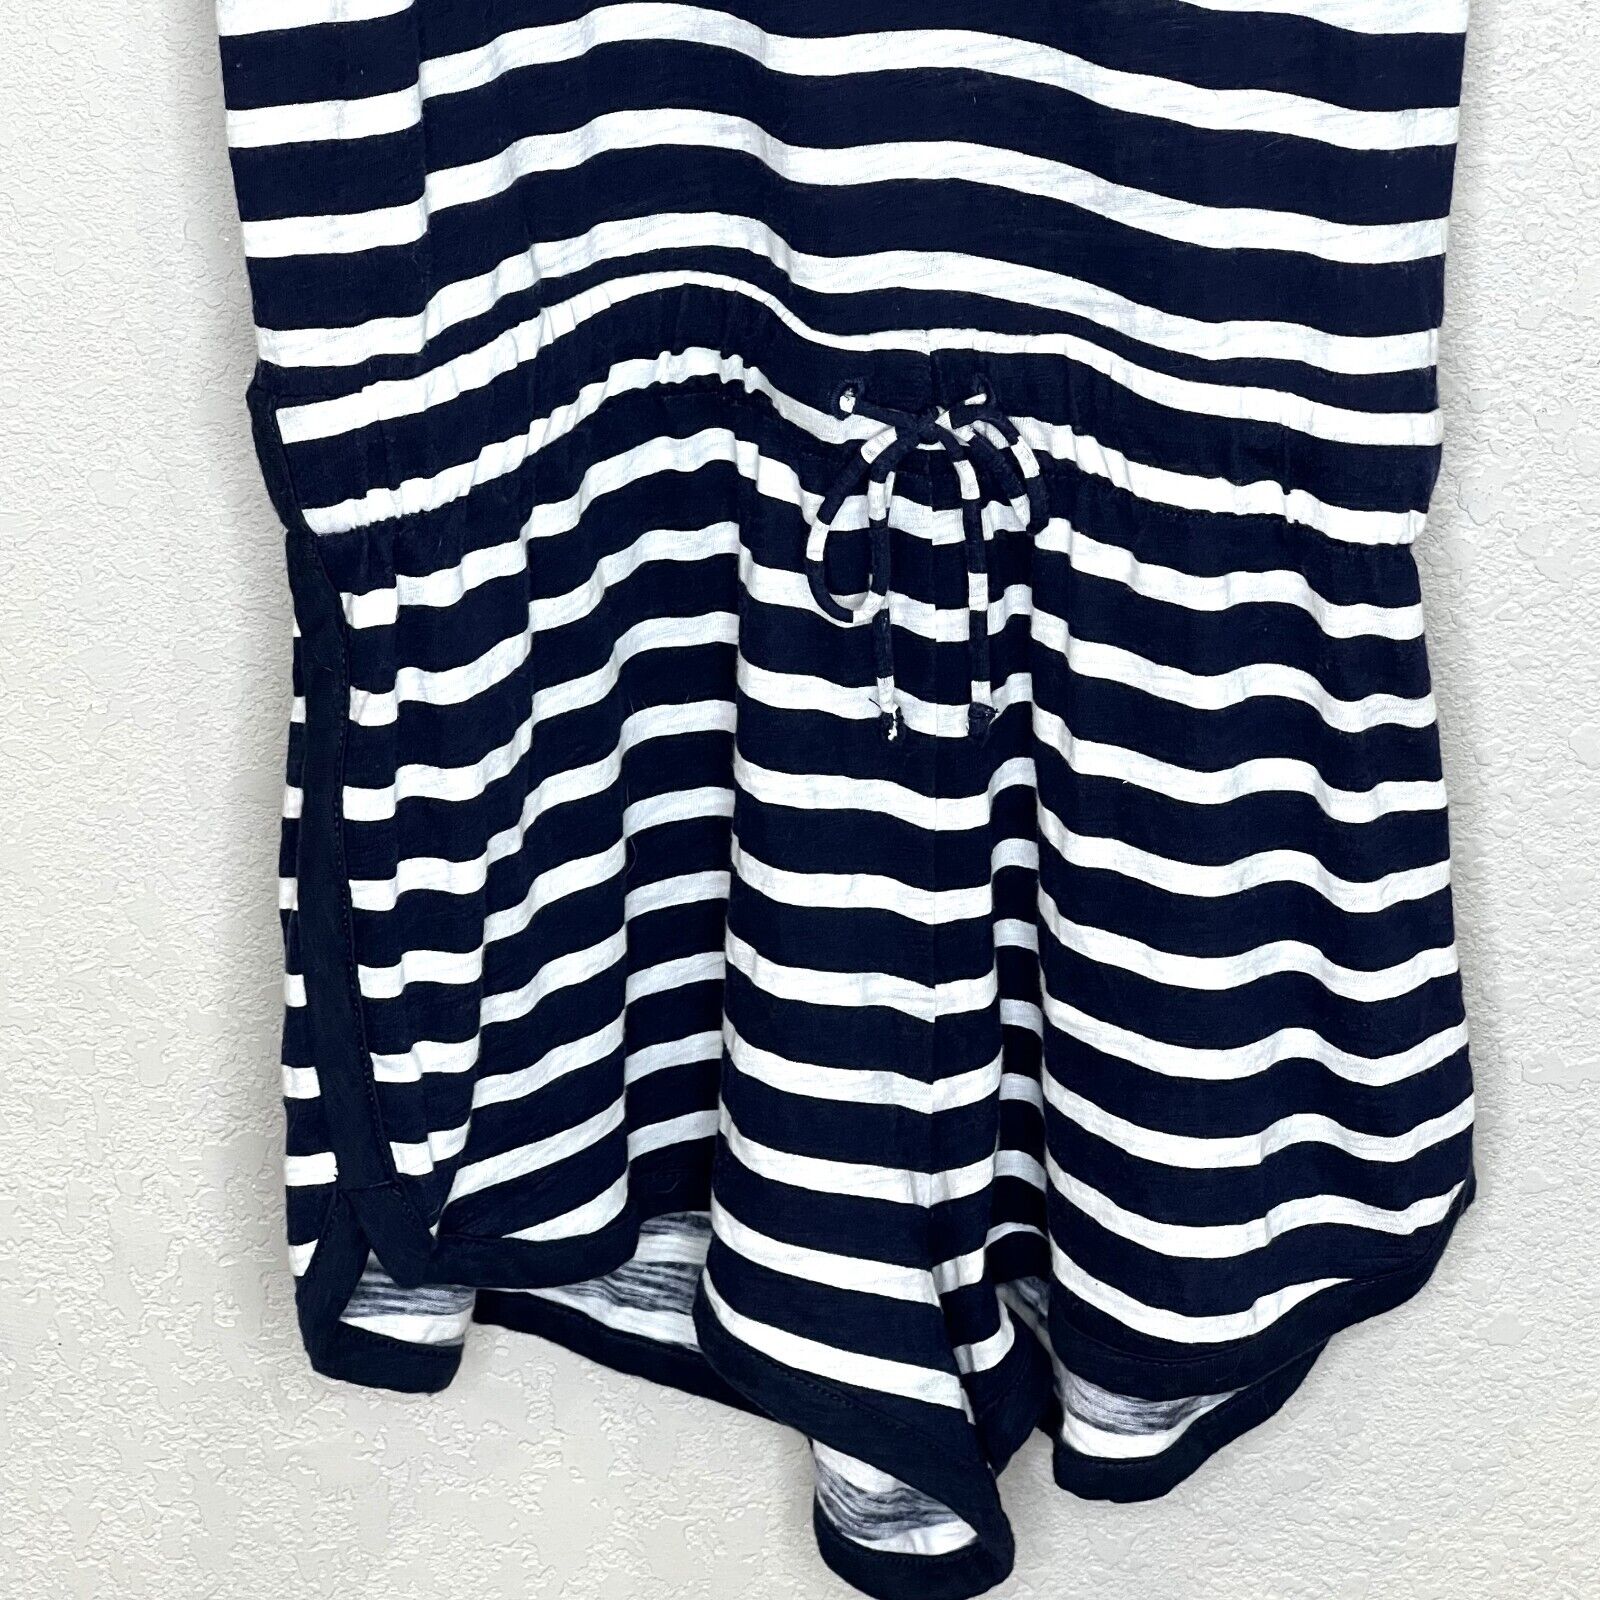 Everlane Gia Navy Blue & White Striped Shorts Romper Size Small 